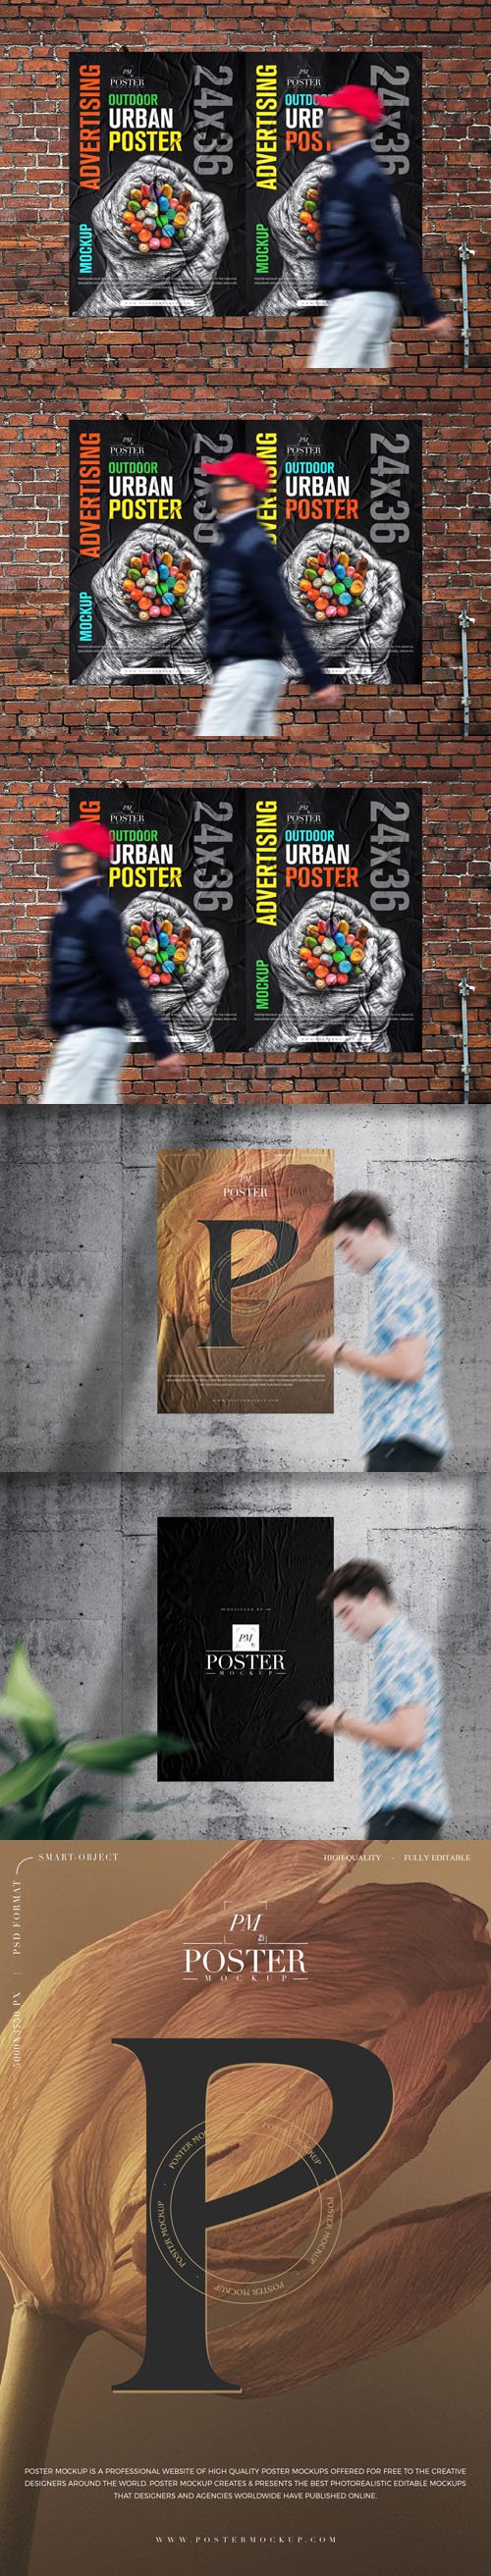 Outdoor Urban Posters PSD Mockups Templates